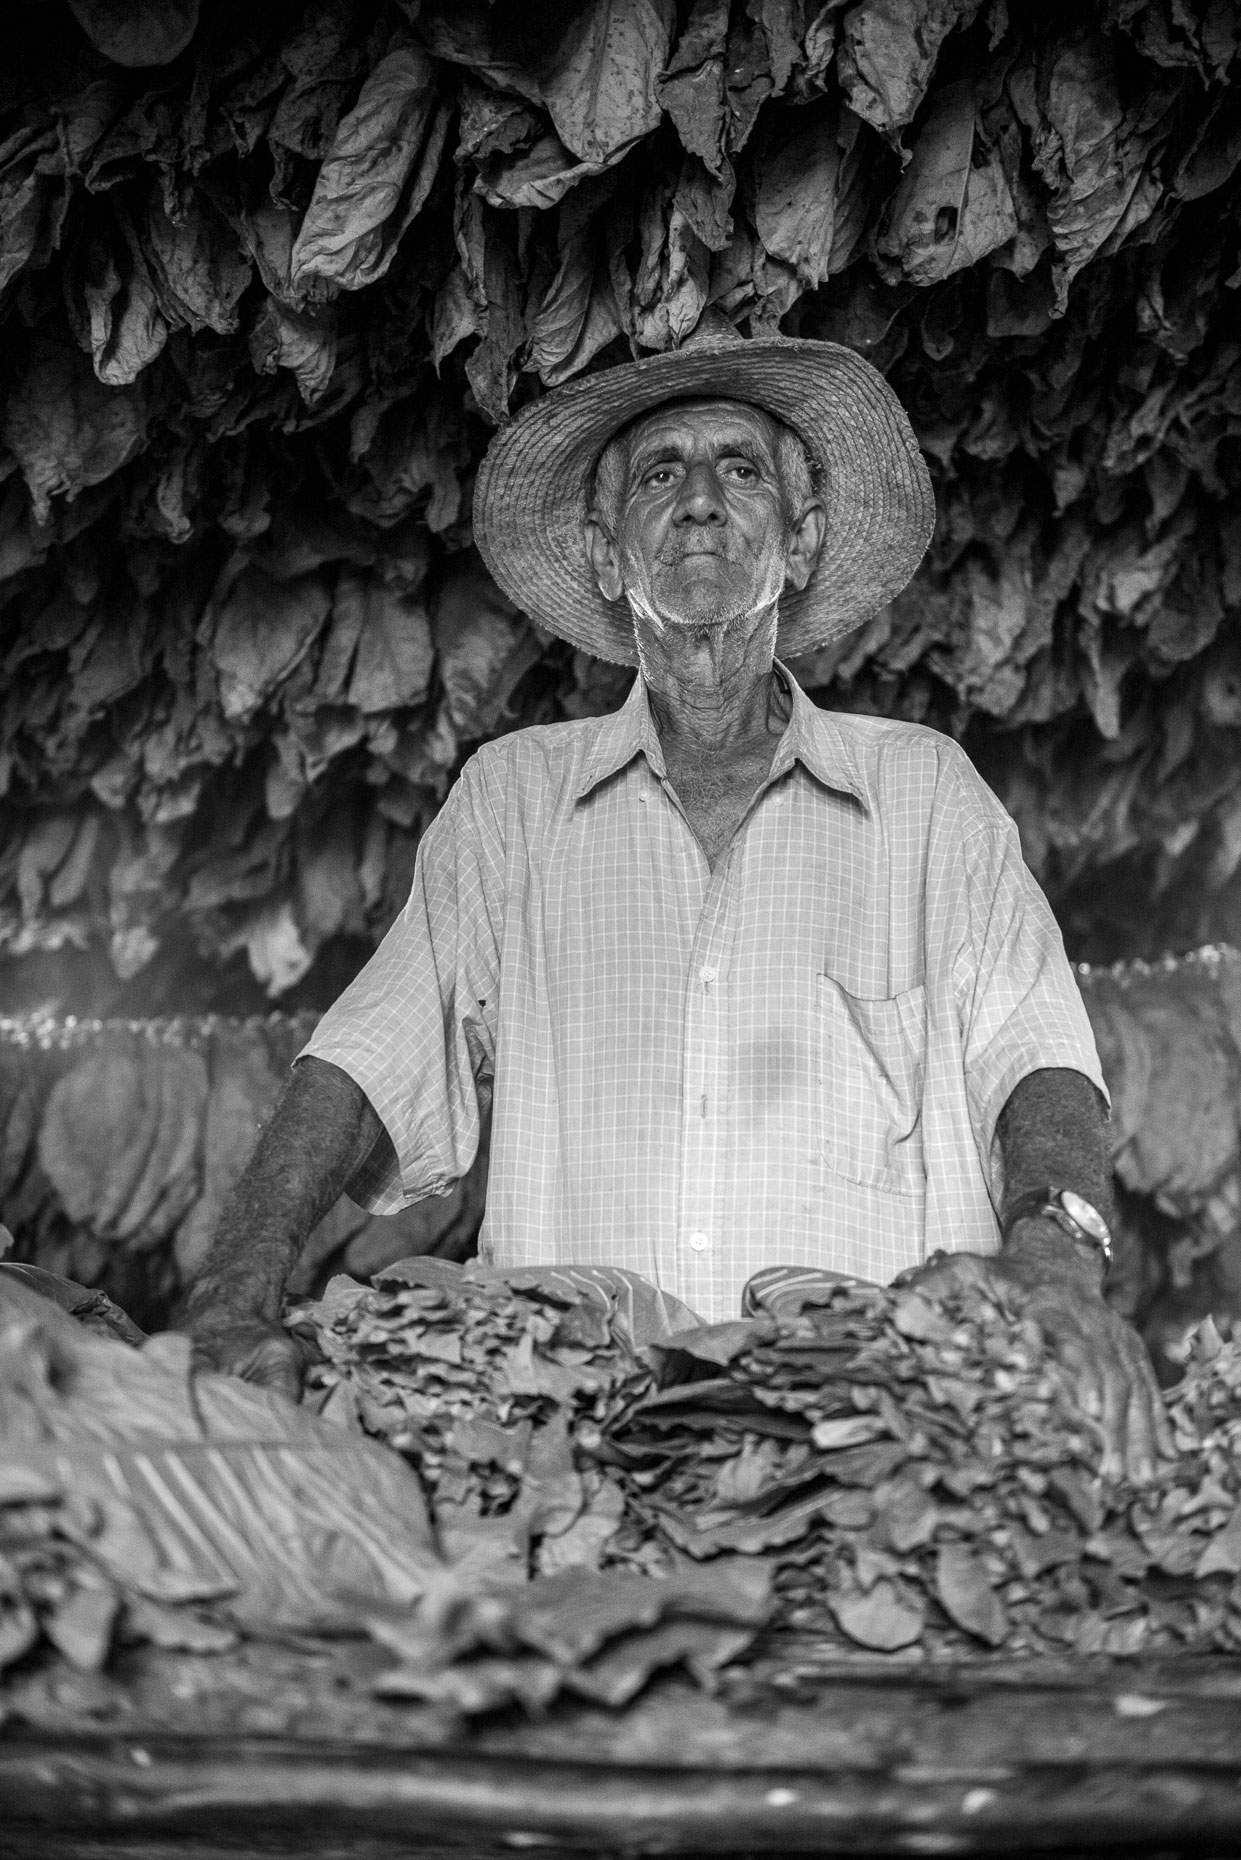 Tabacco Farmer- Cuba